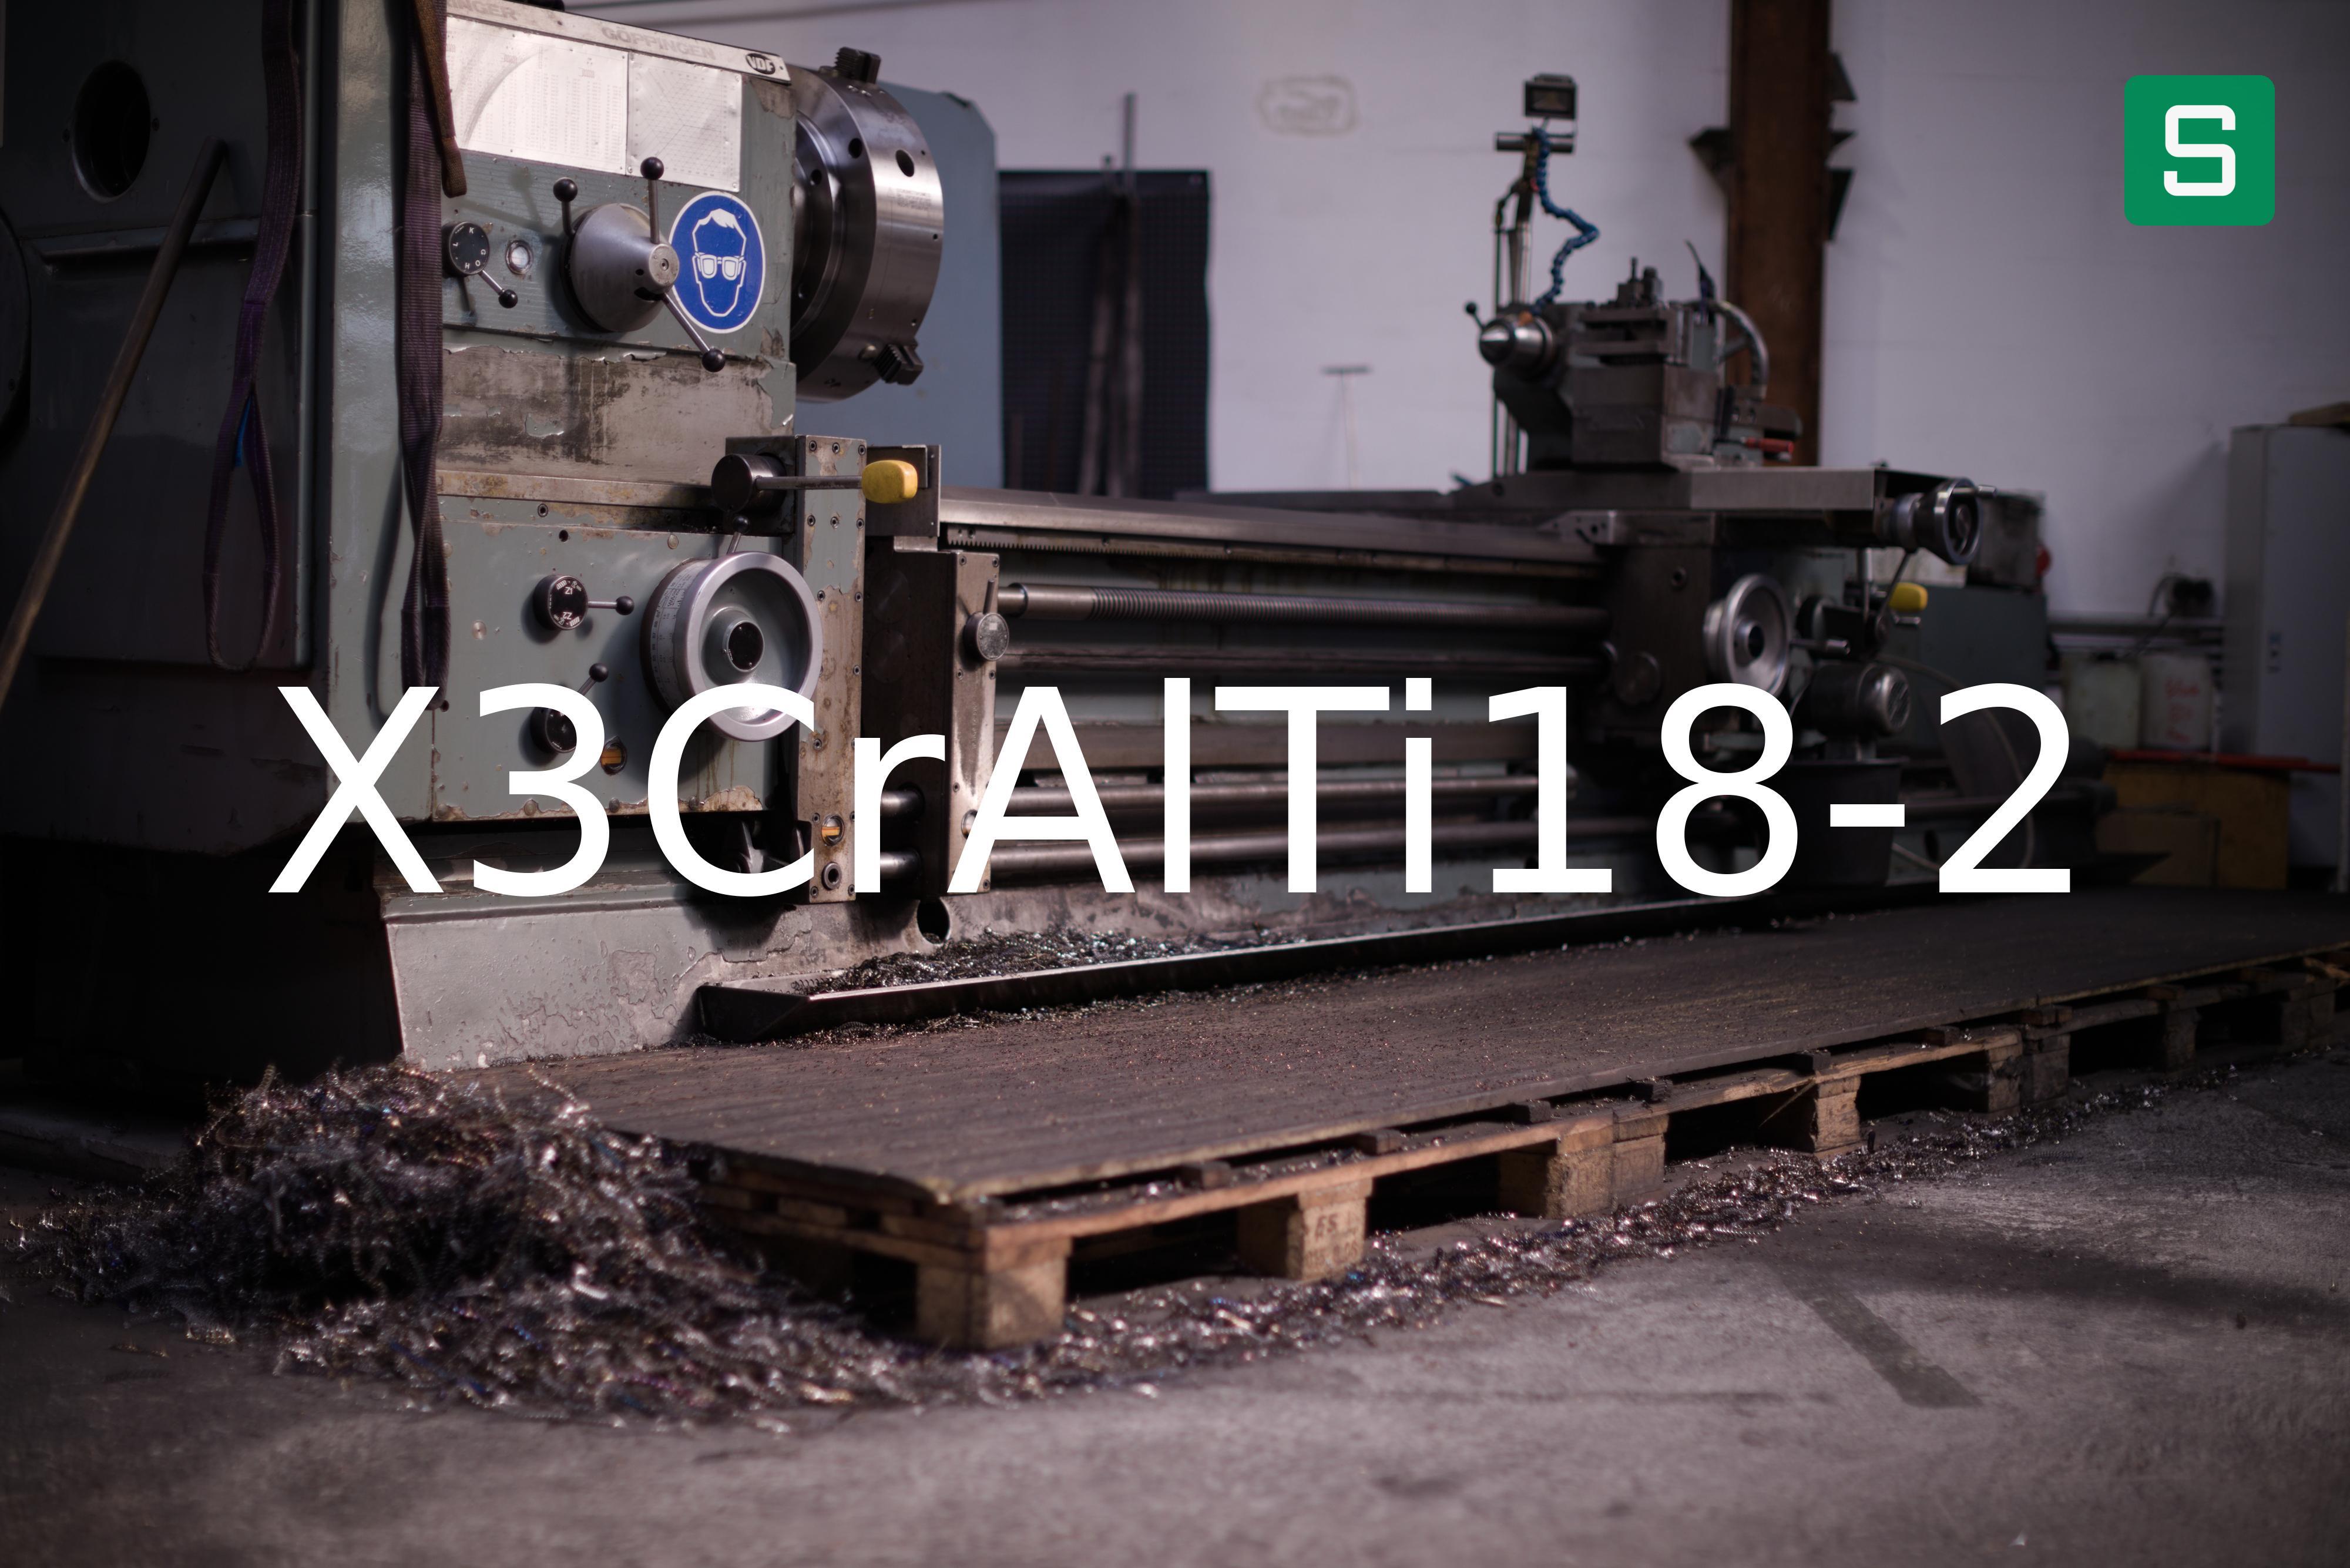 Steel Material: X3CrAlTi18-2